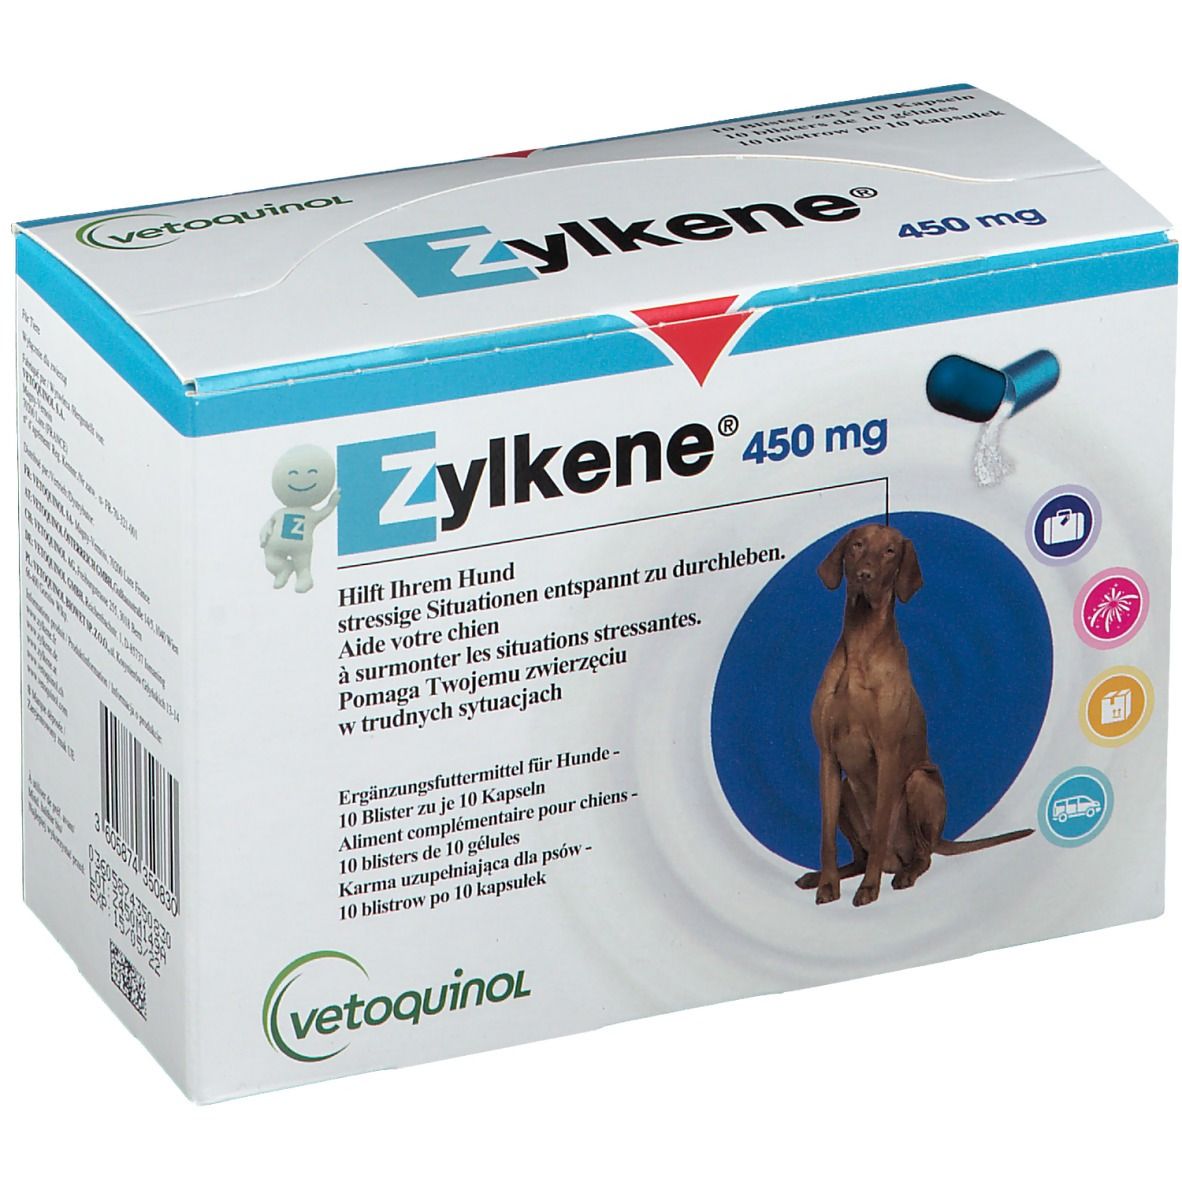 Zylkène® 450 mg für Hunde